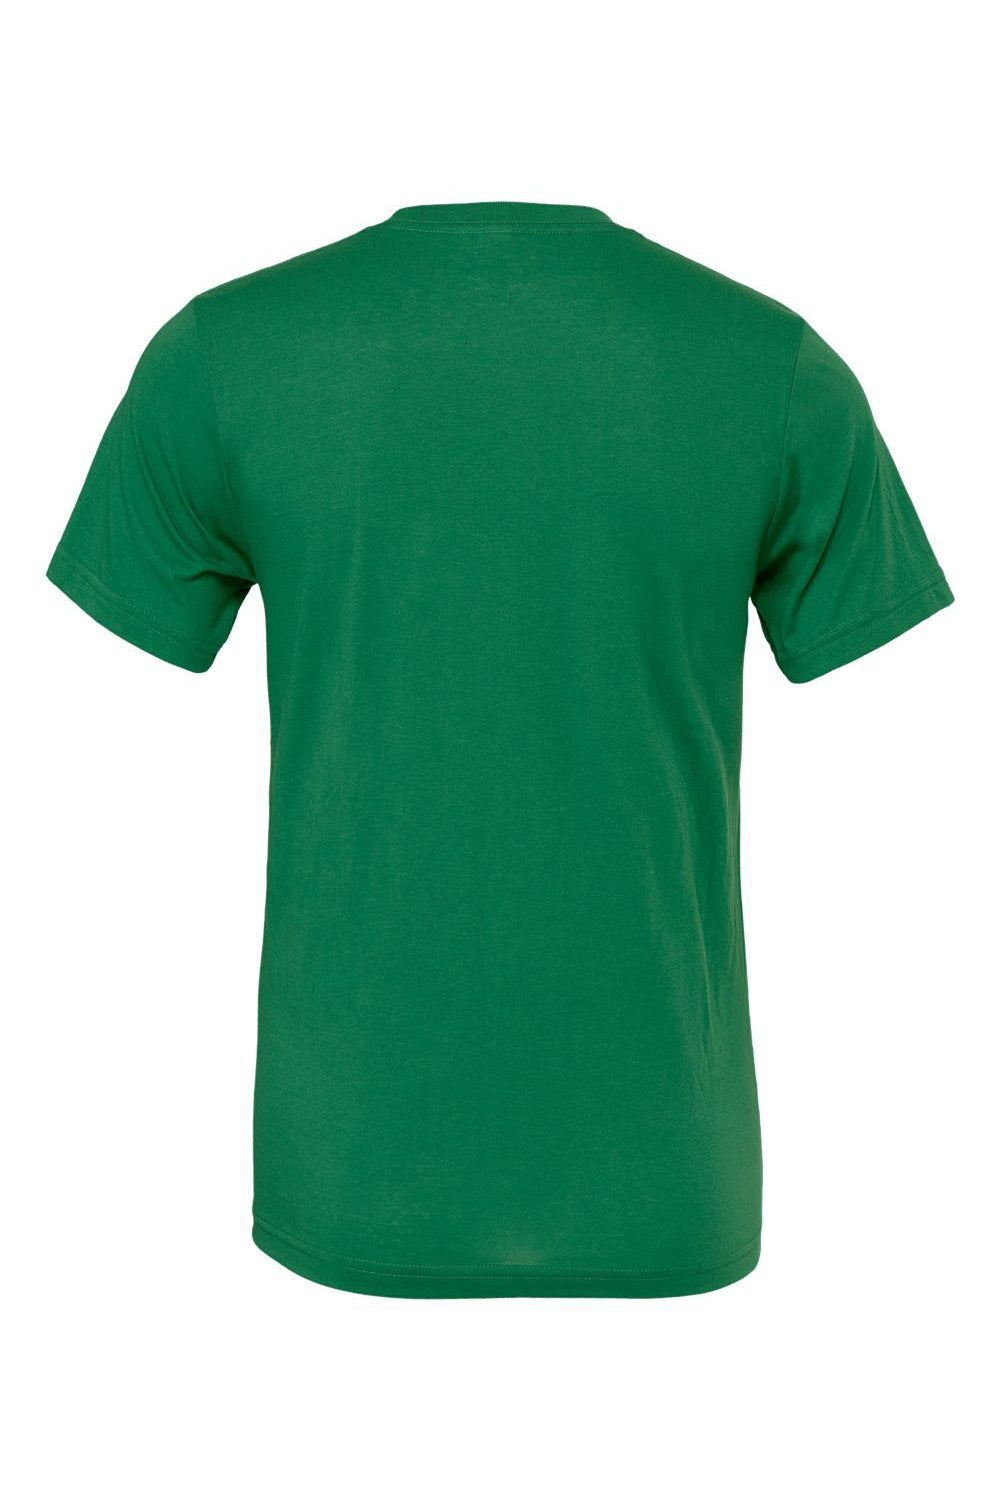 Bella + Canvas BC3001/3001C Mens Jersey Short Sleeve Crewneck T-Shirt Evergreen Flat Back